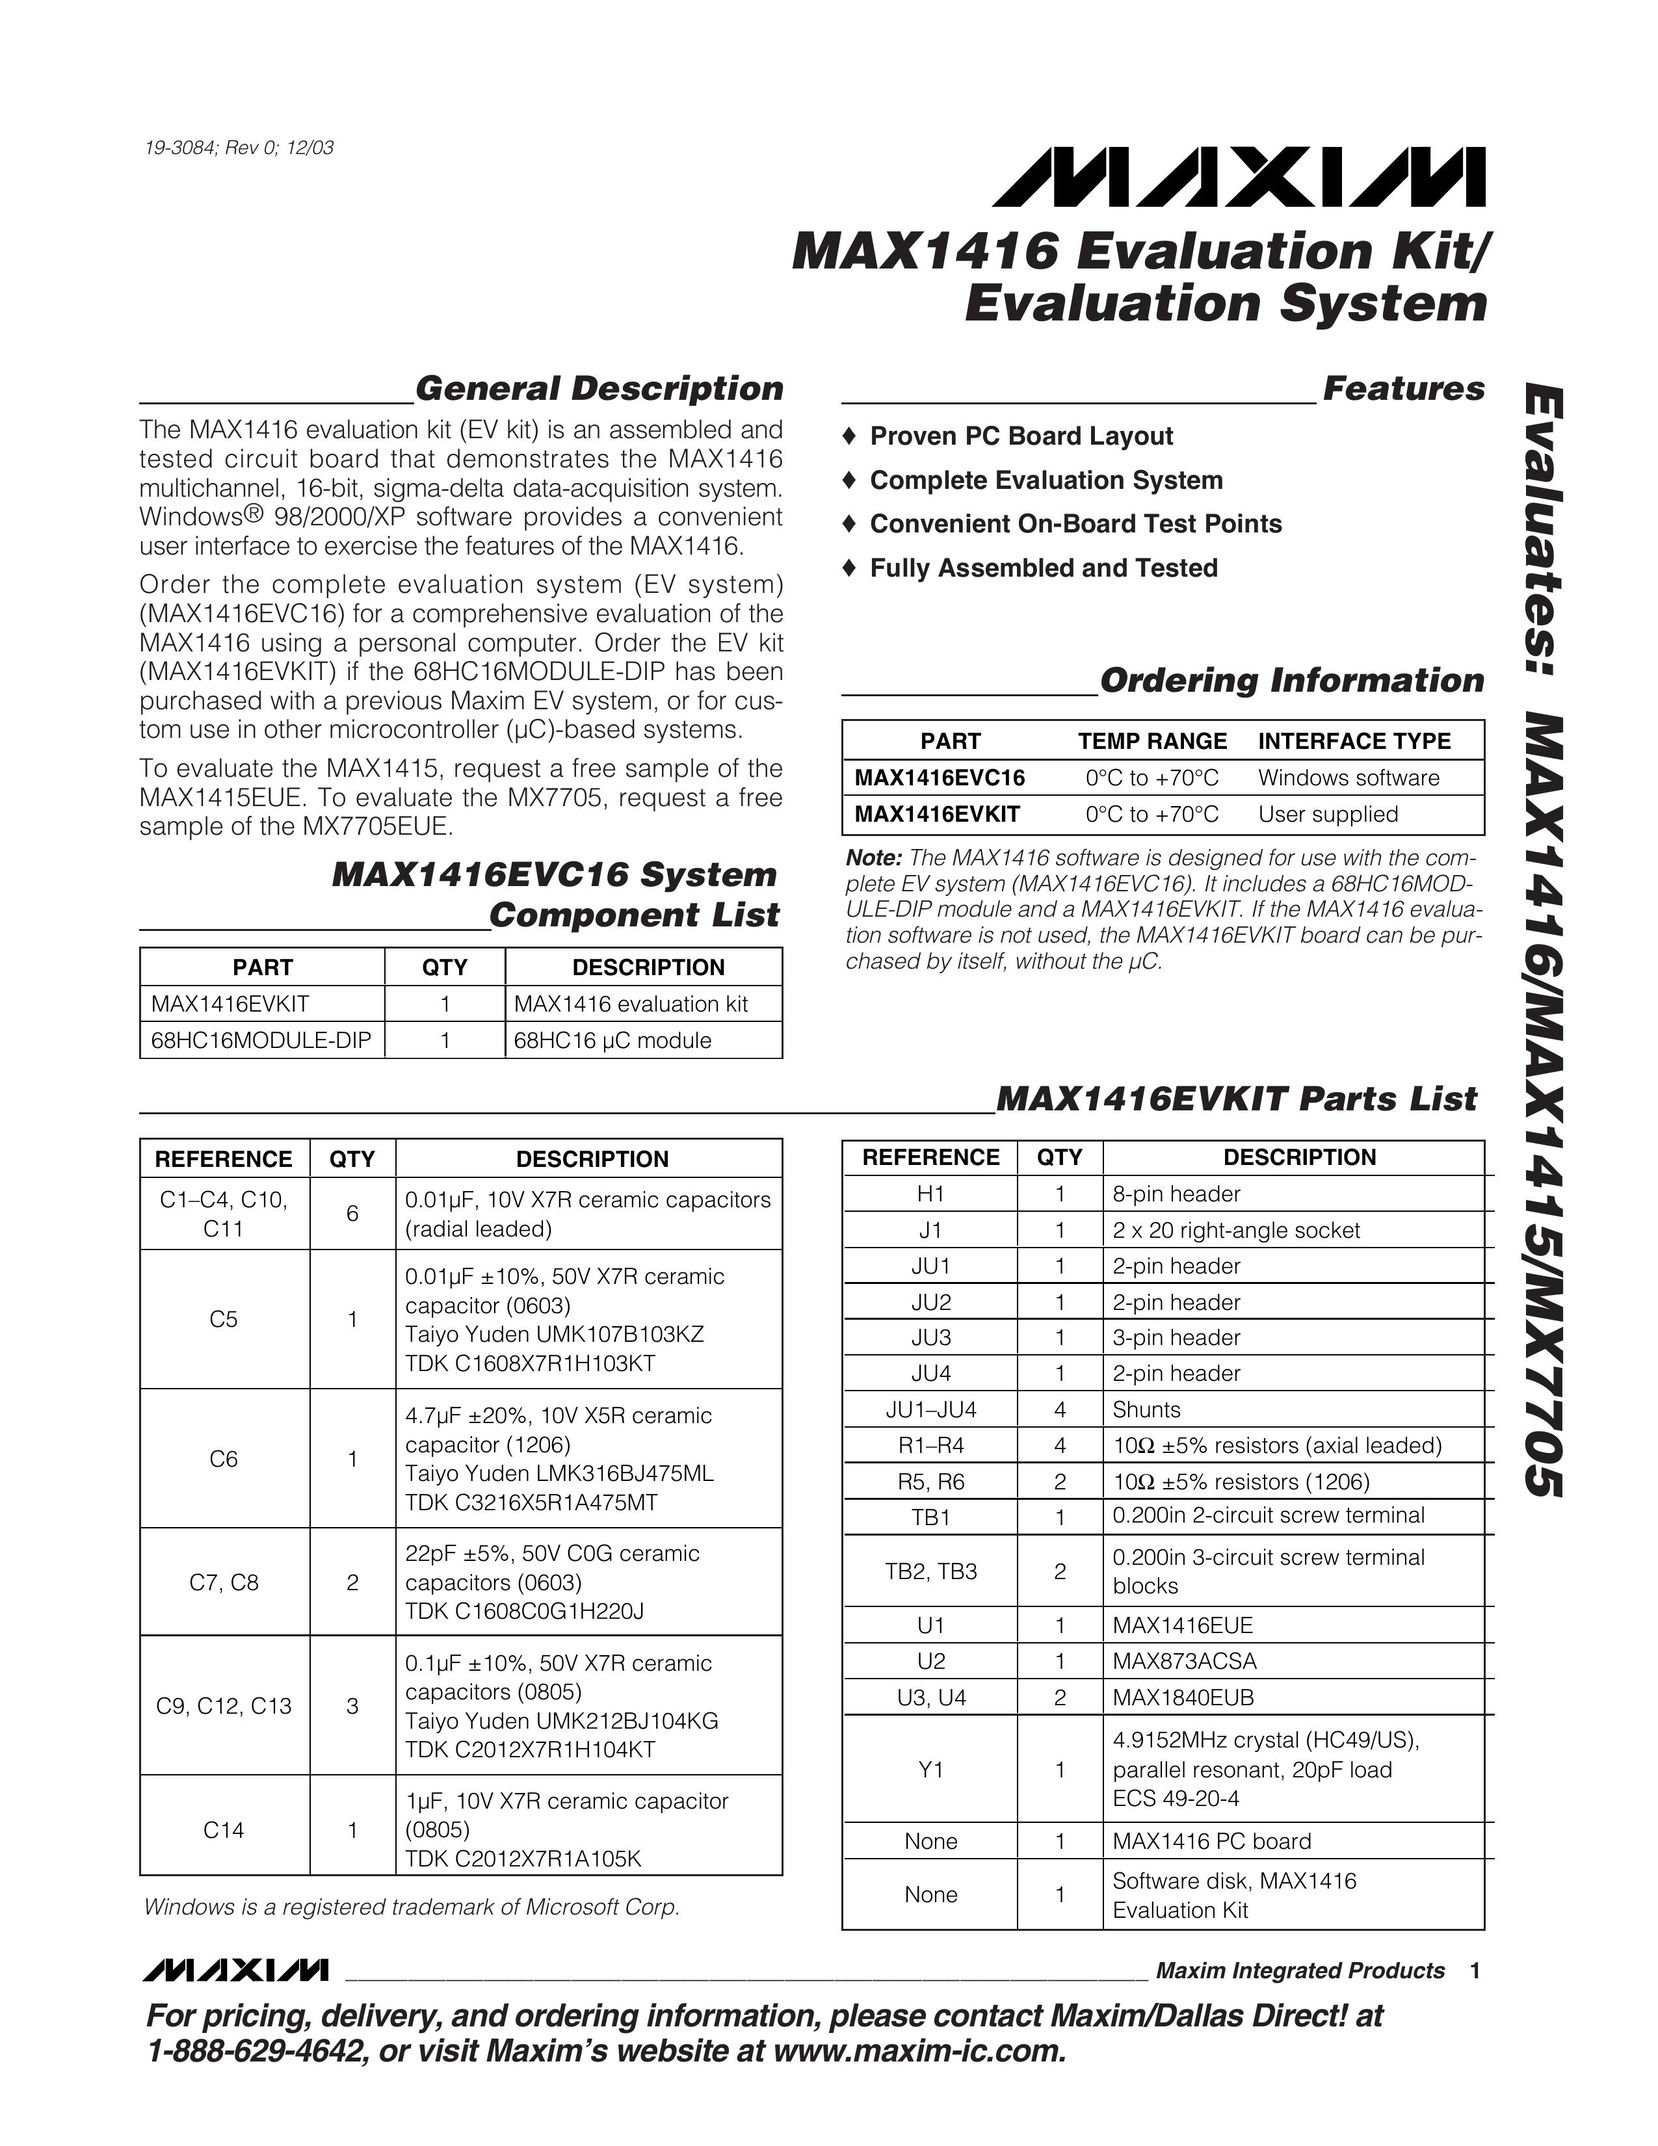 Maxim MX7705EUE Computer Hardware User Manual